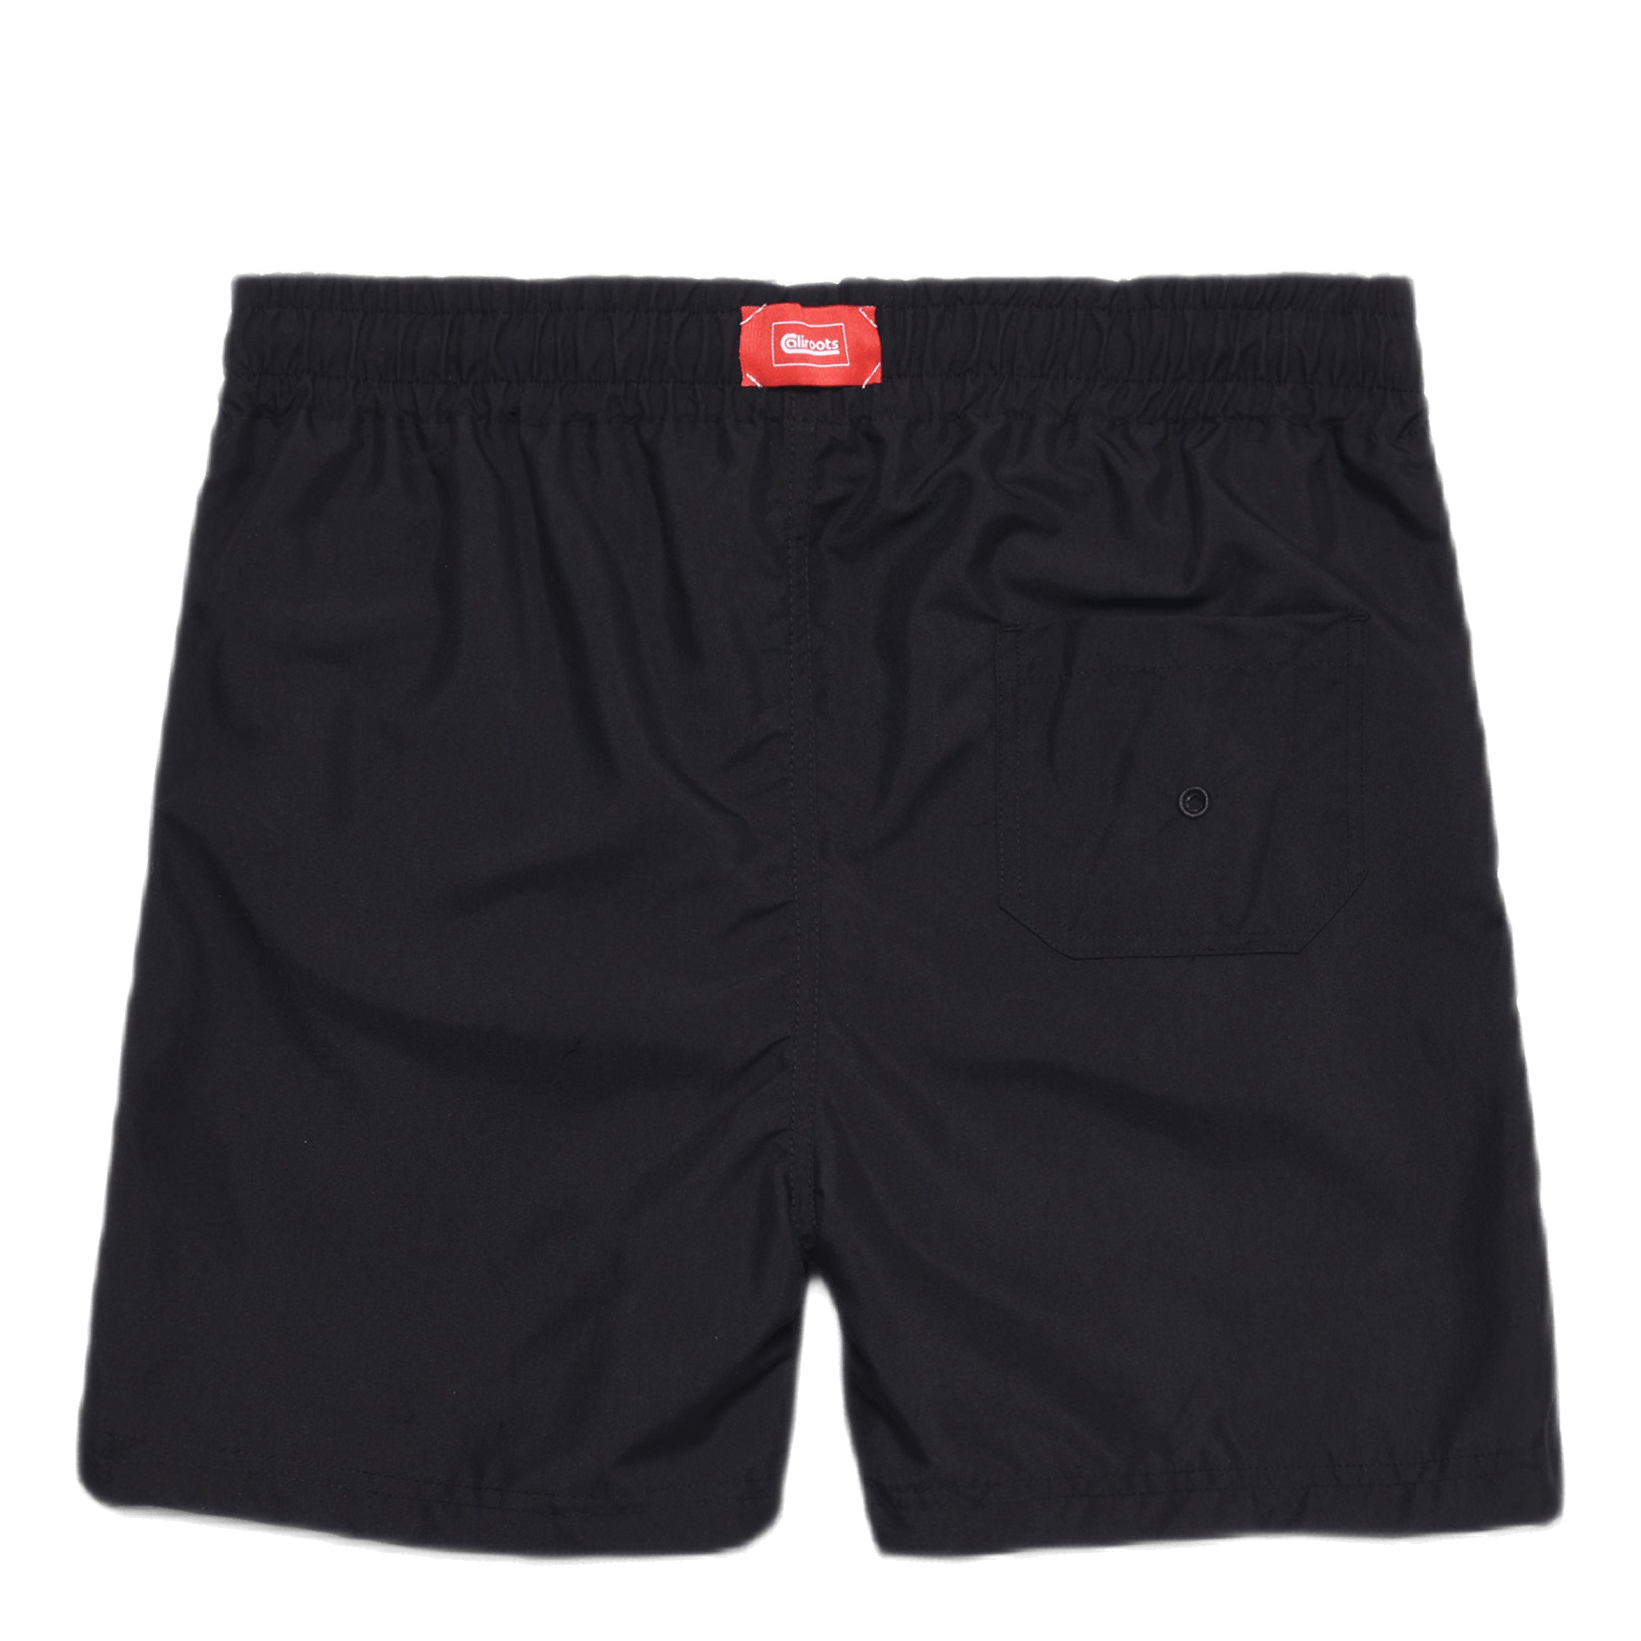 Palm Swim Shorts Black